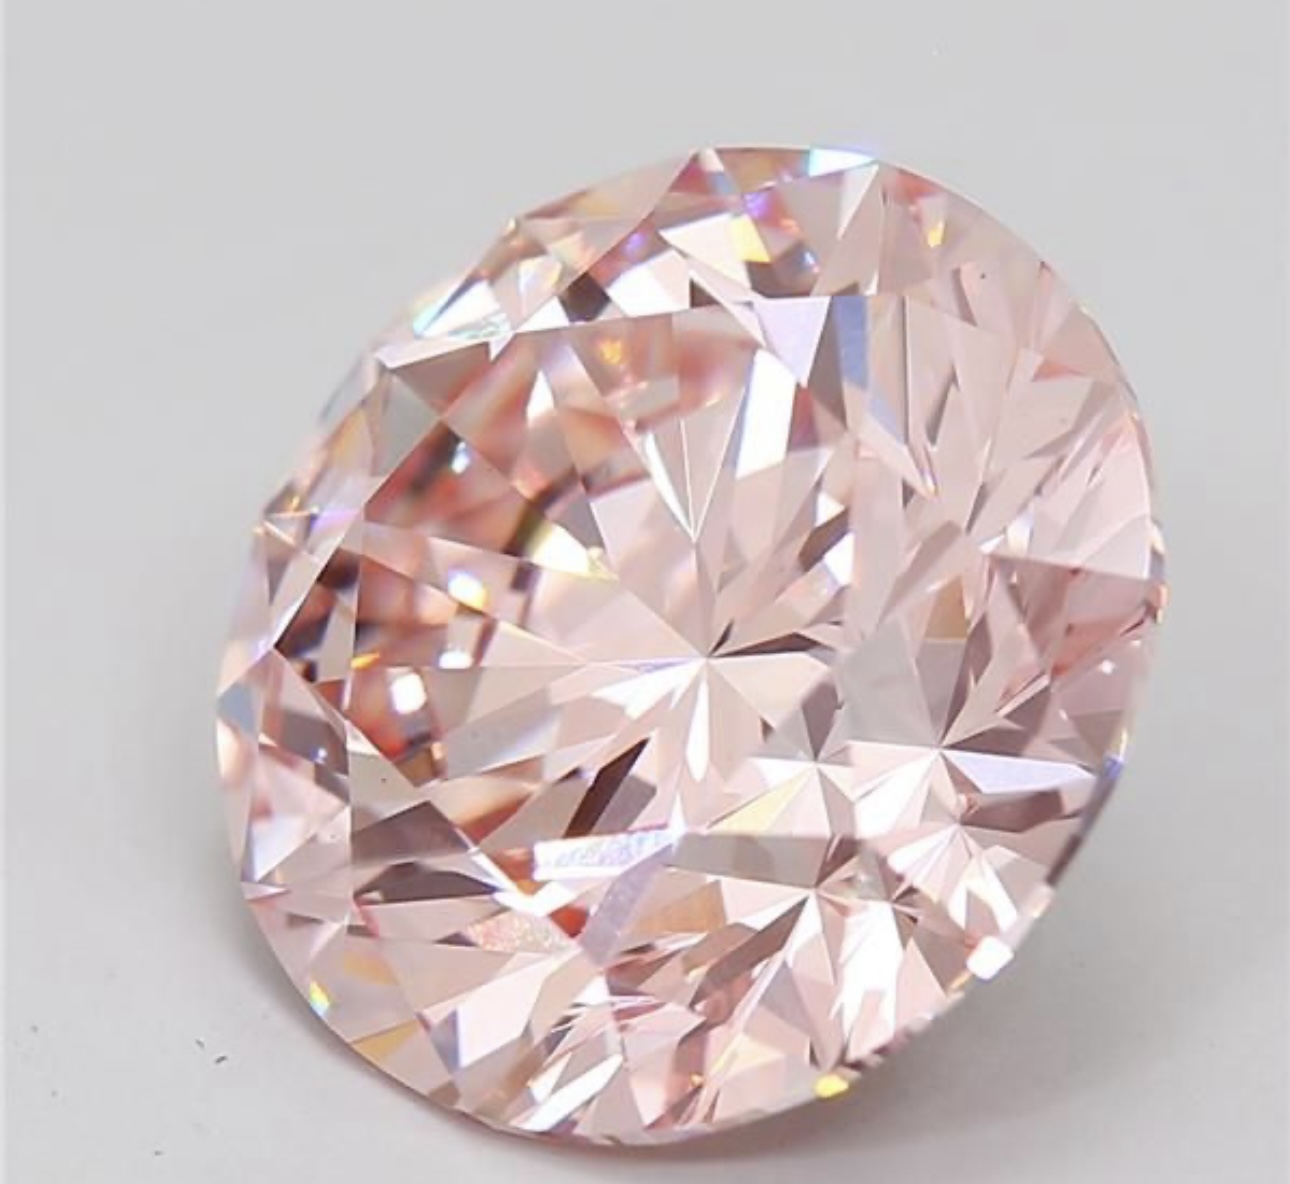 Round Brilliant Cut Diamond 7.42 Carat Fancy Pink Colour VS1 Clarity - IGI Certificate - Image 2 of 8